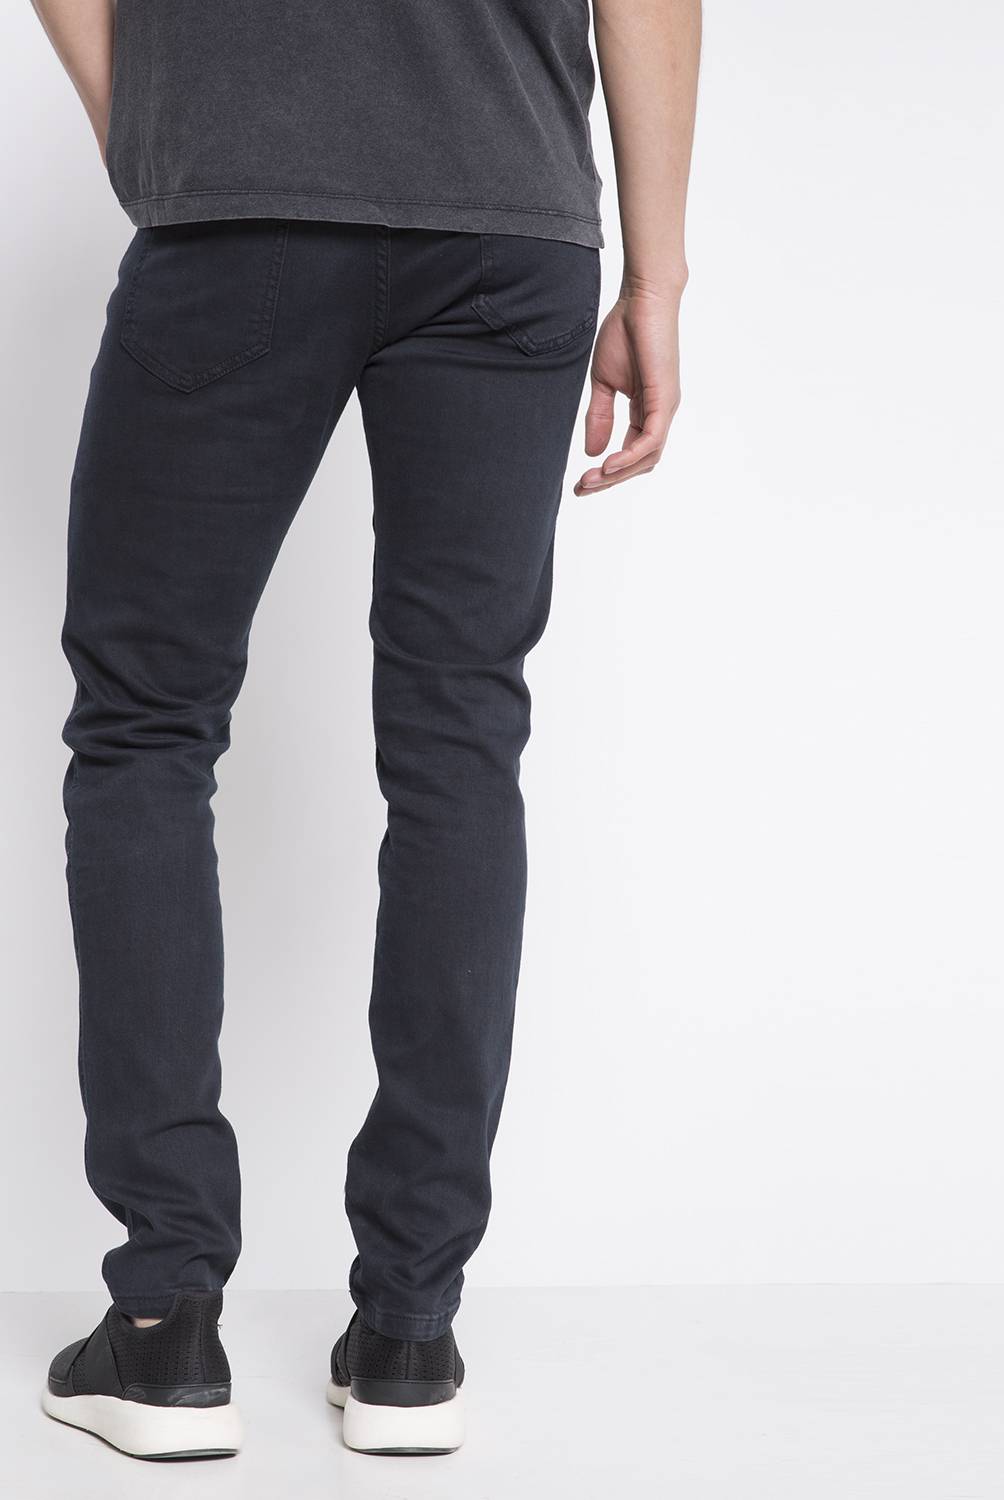 MOSSIMO - Jeans 5 Bolsillos Súper Skinny